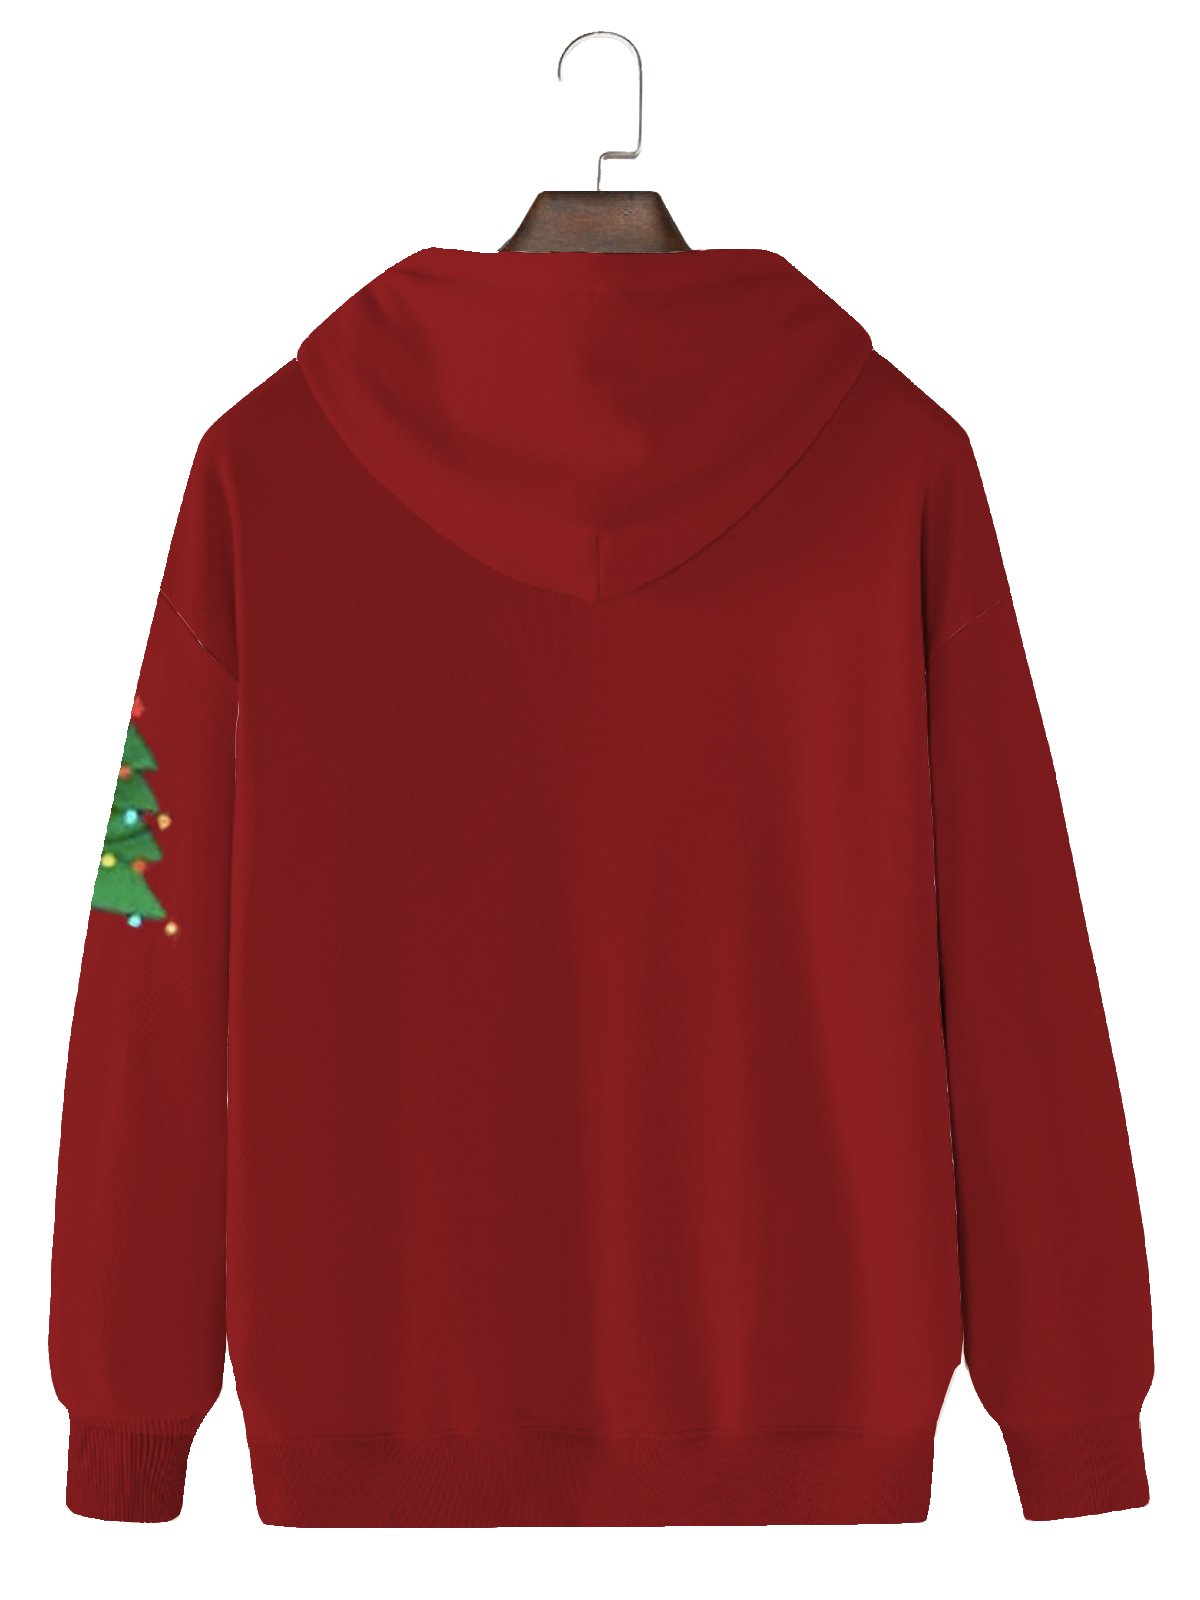 Royaura Men's Christmas Tree Letter Printed Drawstring Hooded Sweatshirt